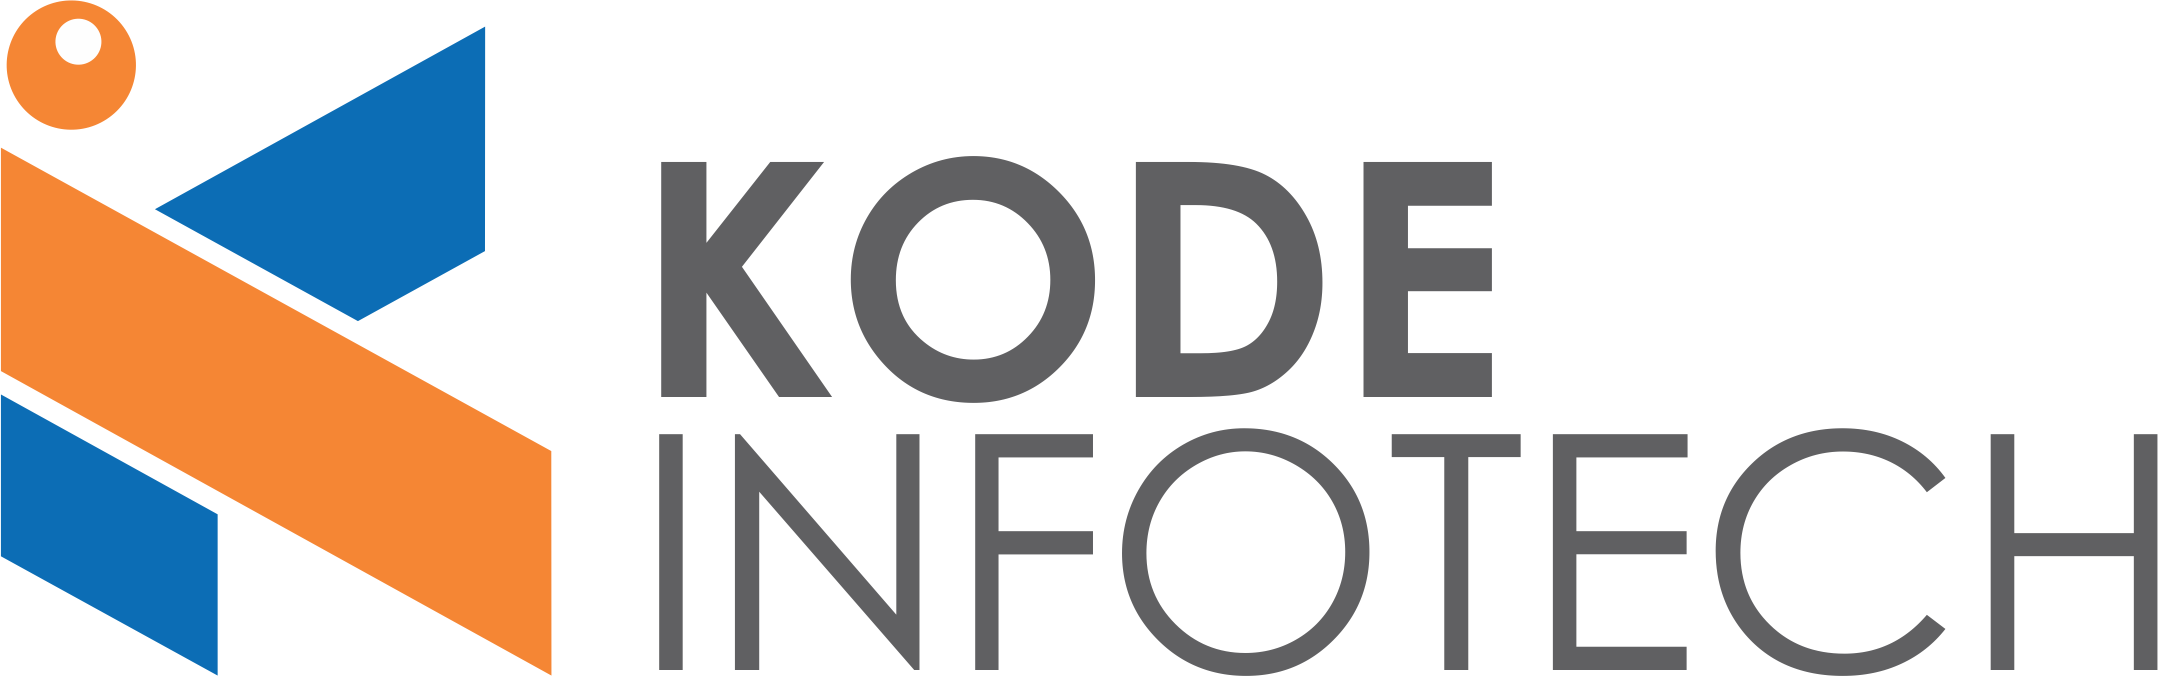 Kode Infotech Perfil da companhia